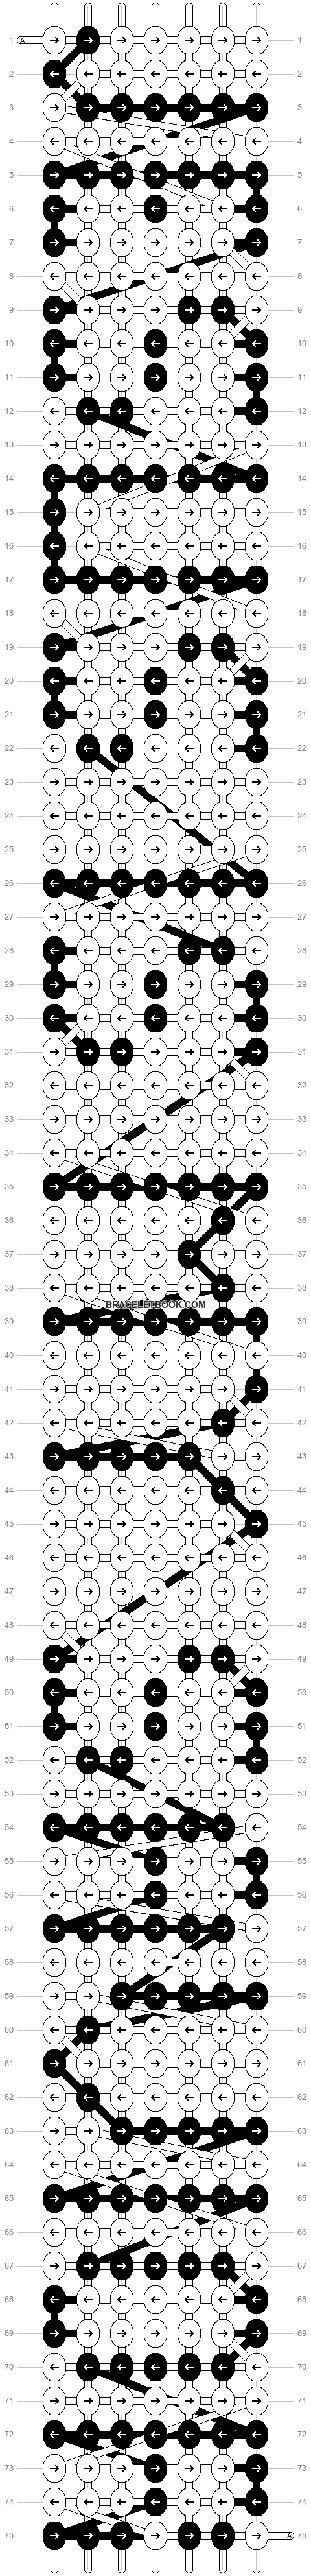 Alpha pattern #716 pattern